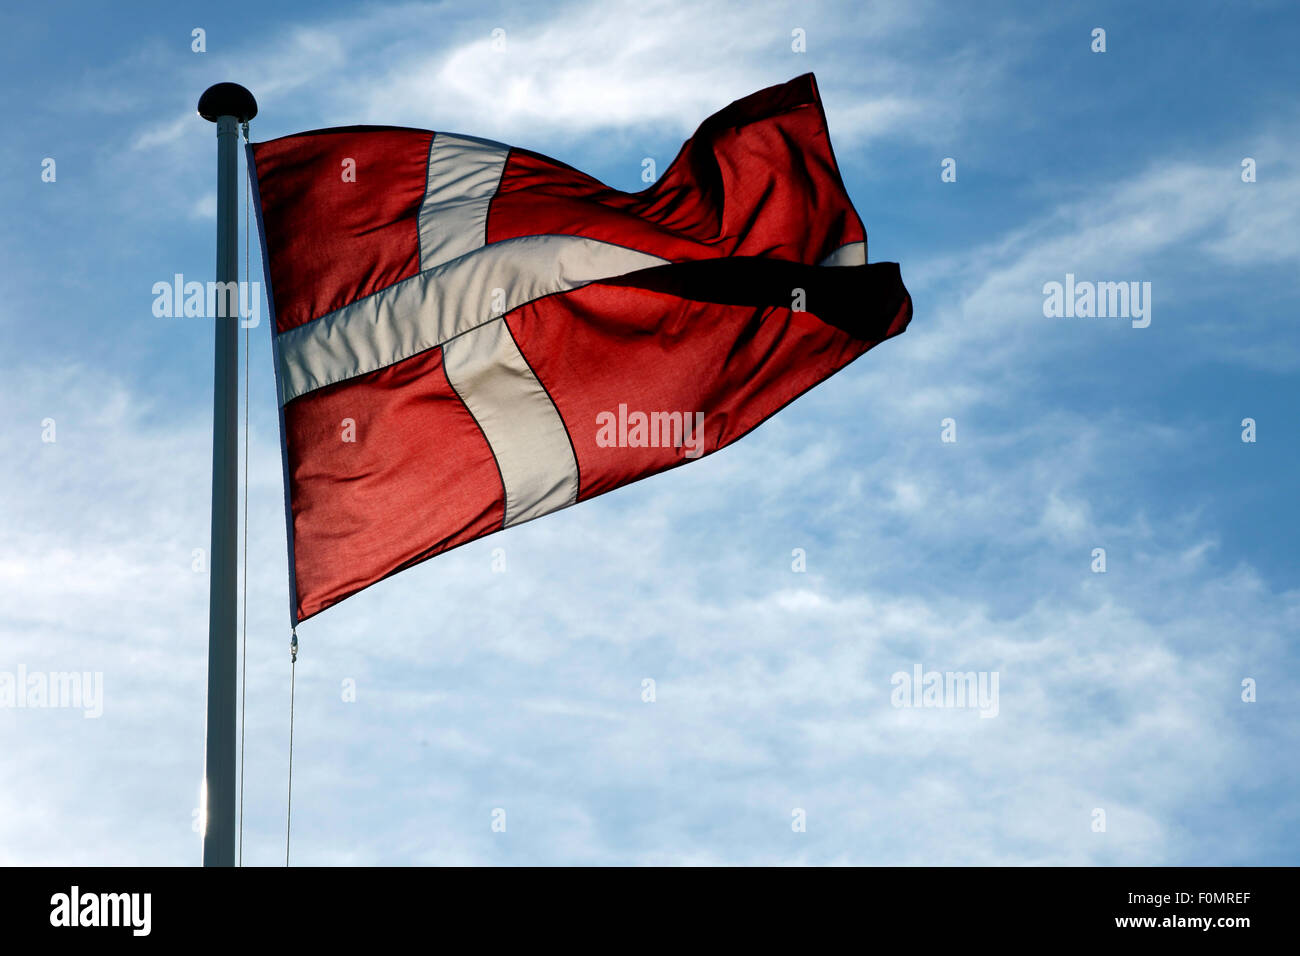 The Danish flag Dannebrog waving against blue sky Stock Photo